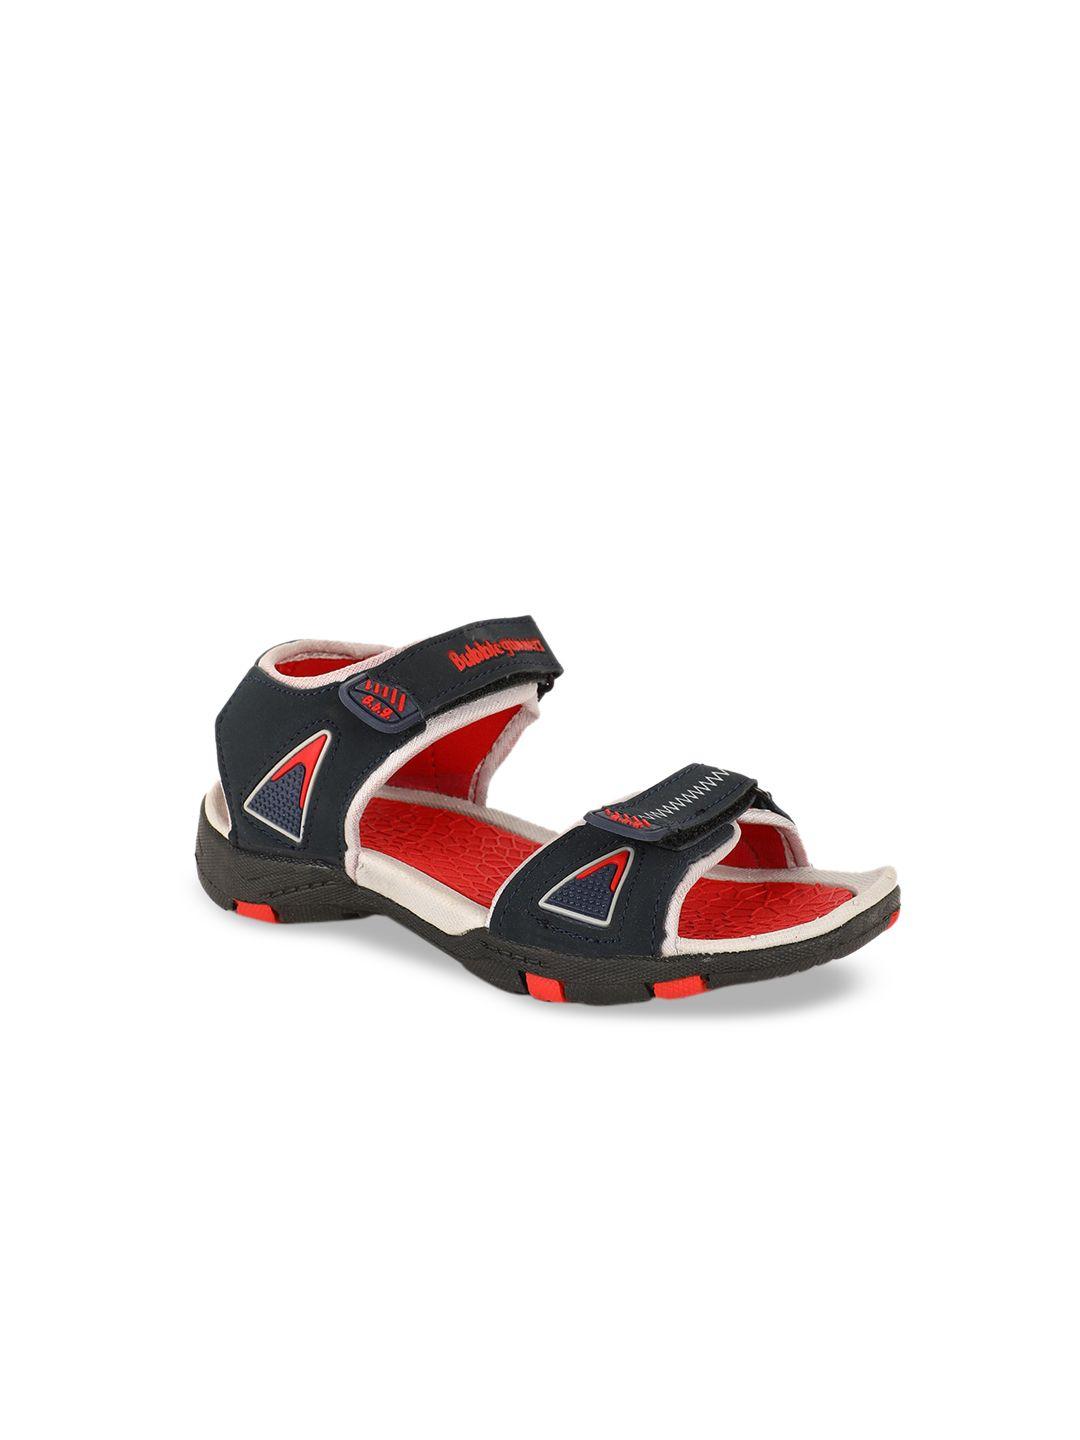 bubblegummers-boys-black-&-red-comfort-sandals